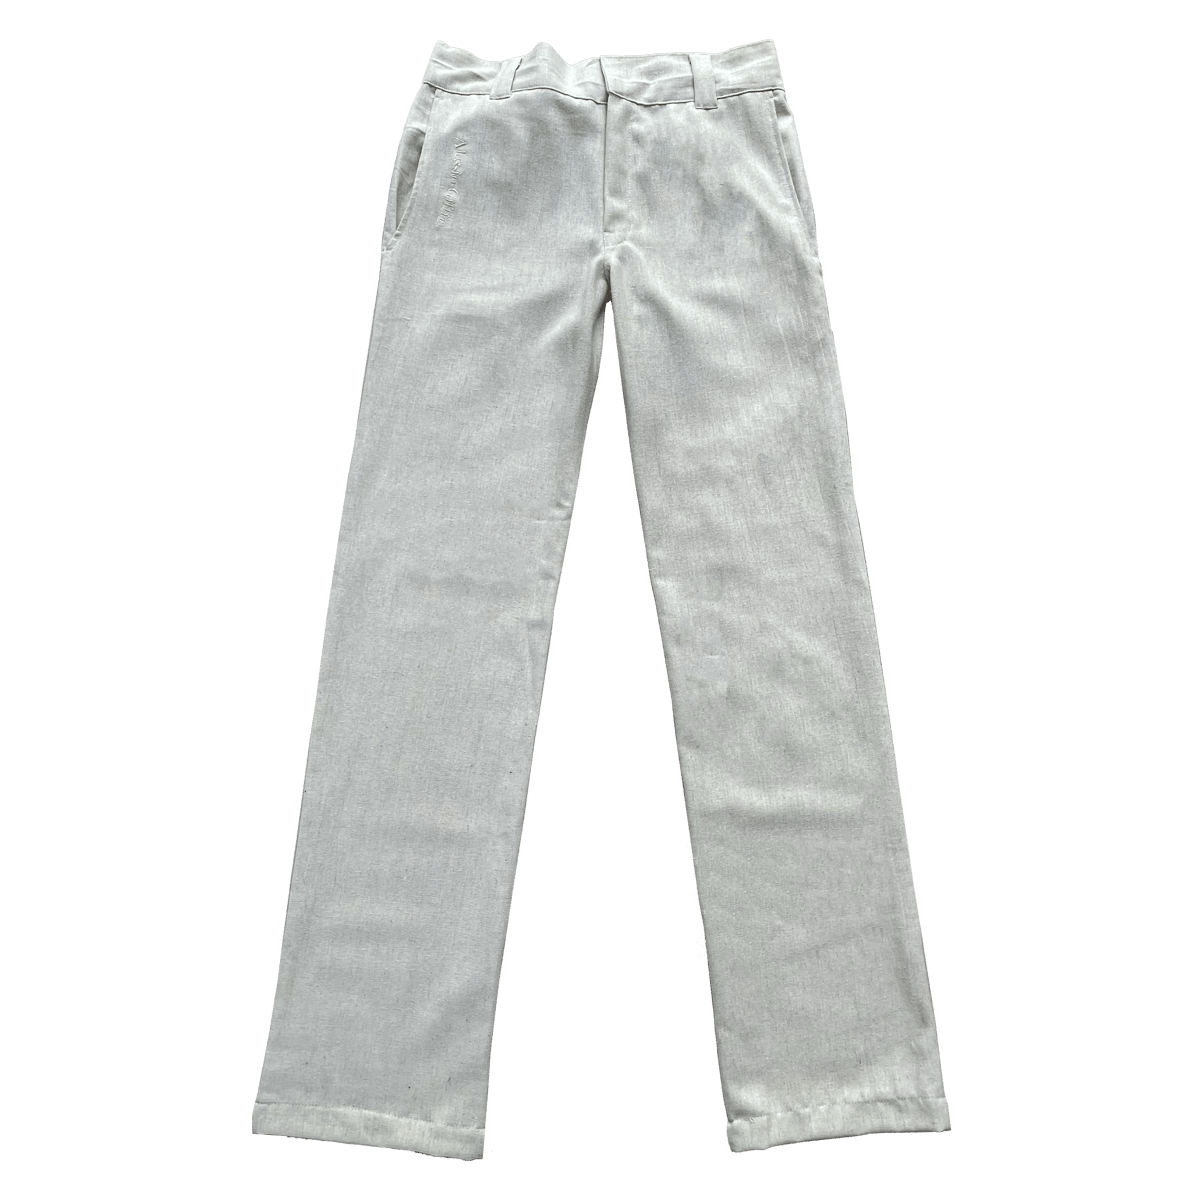 Image of Raw linen pants